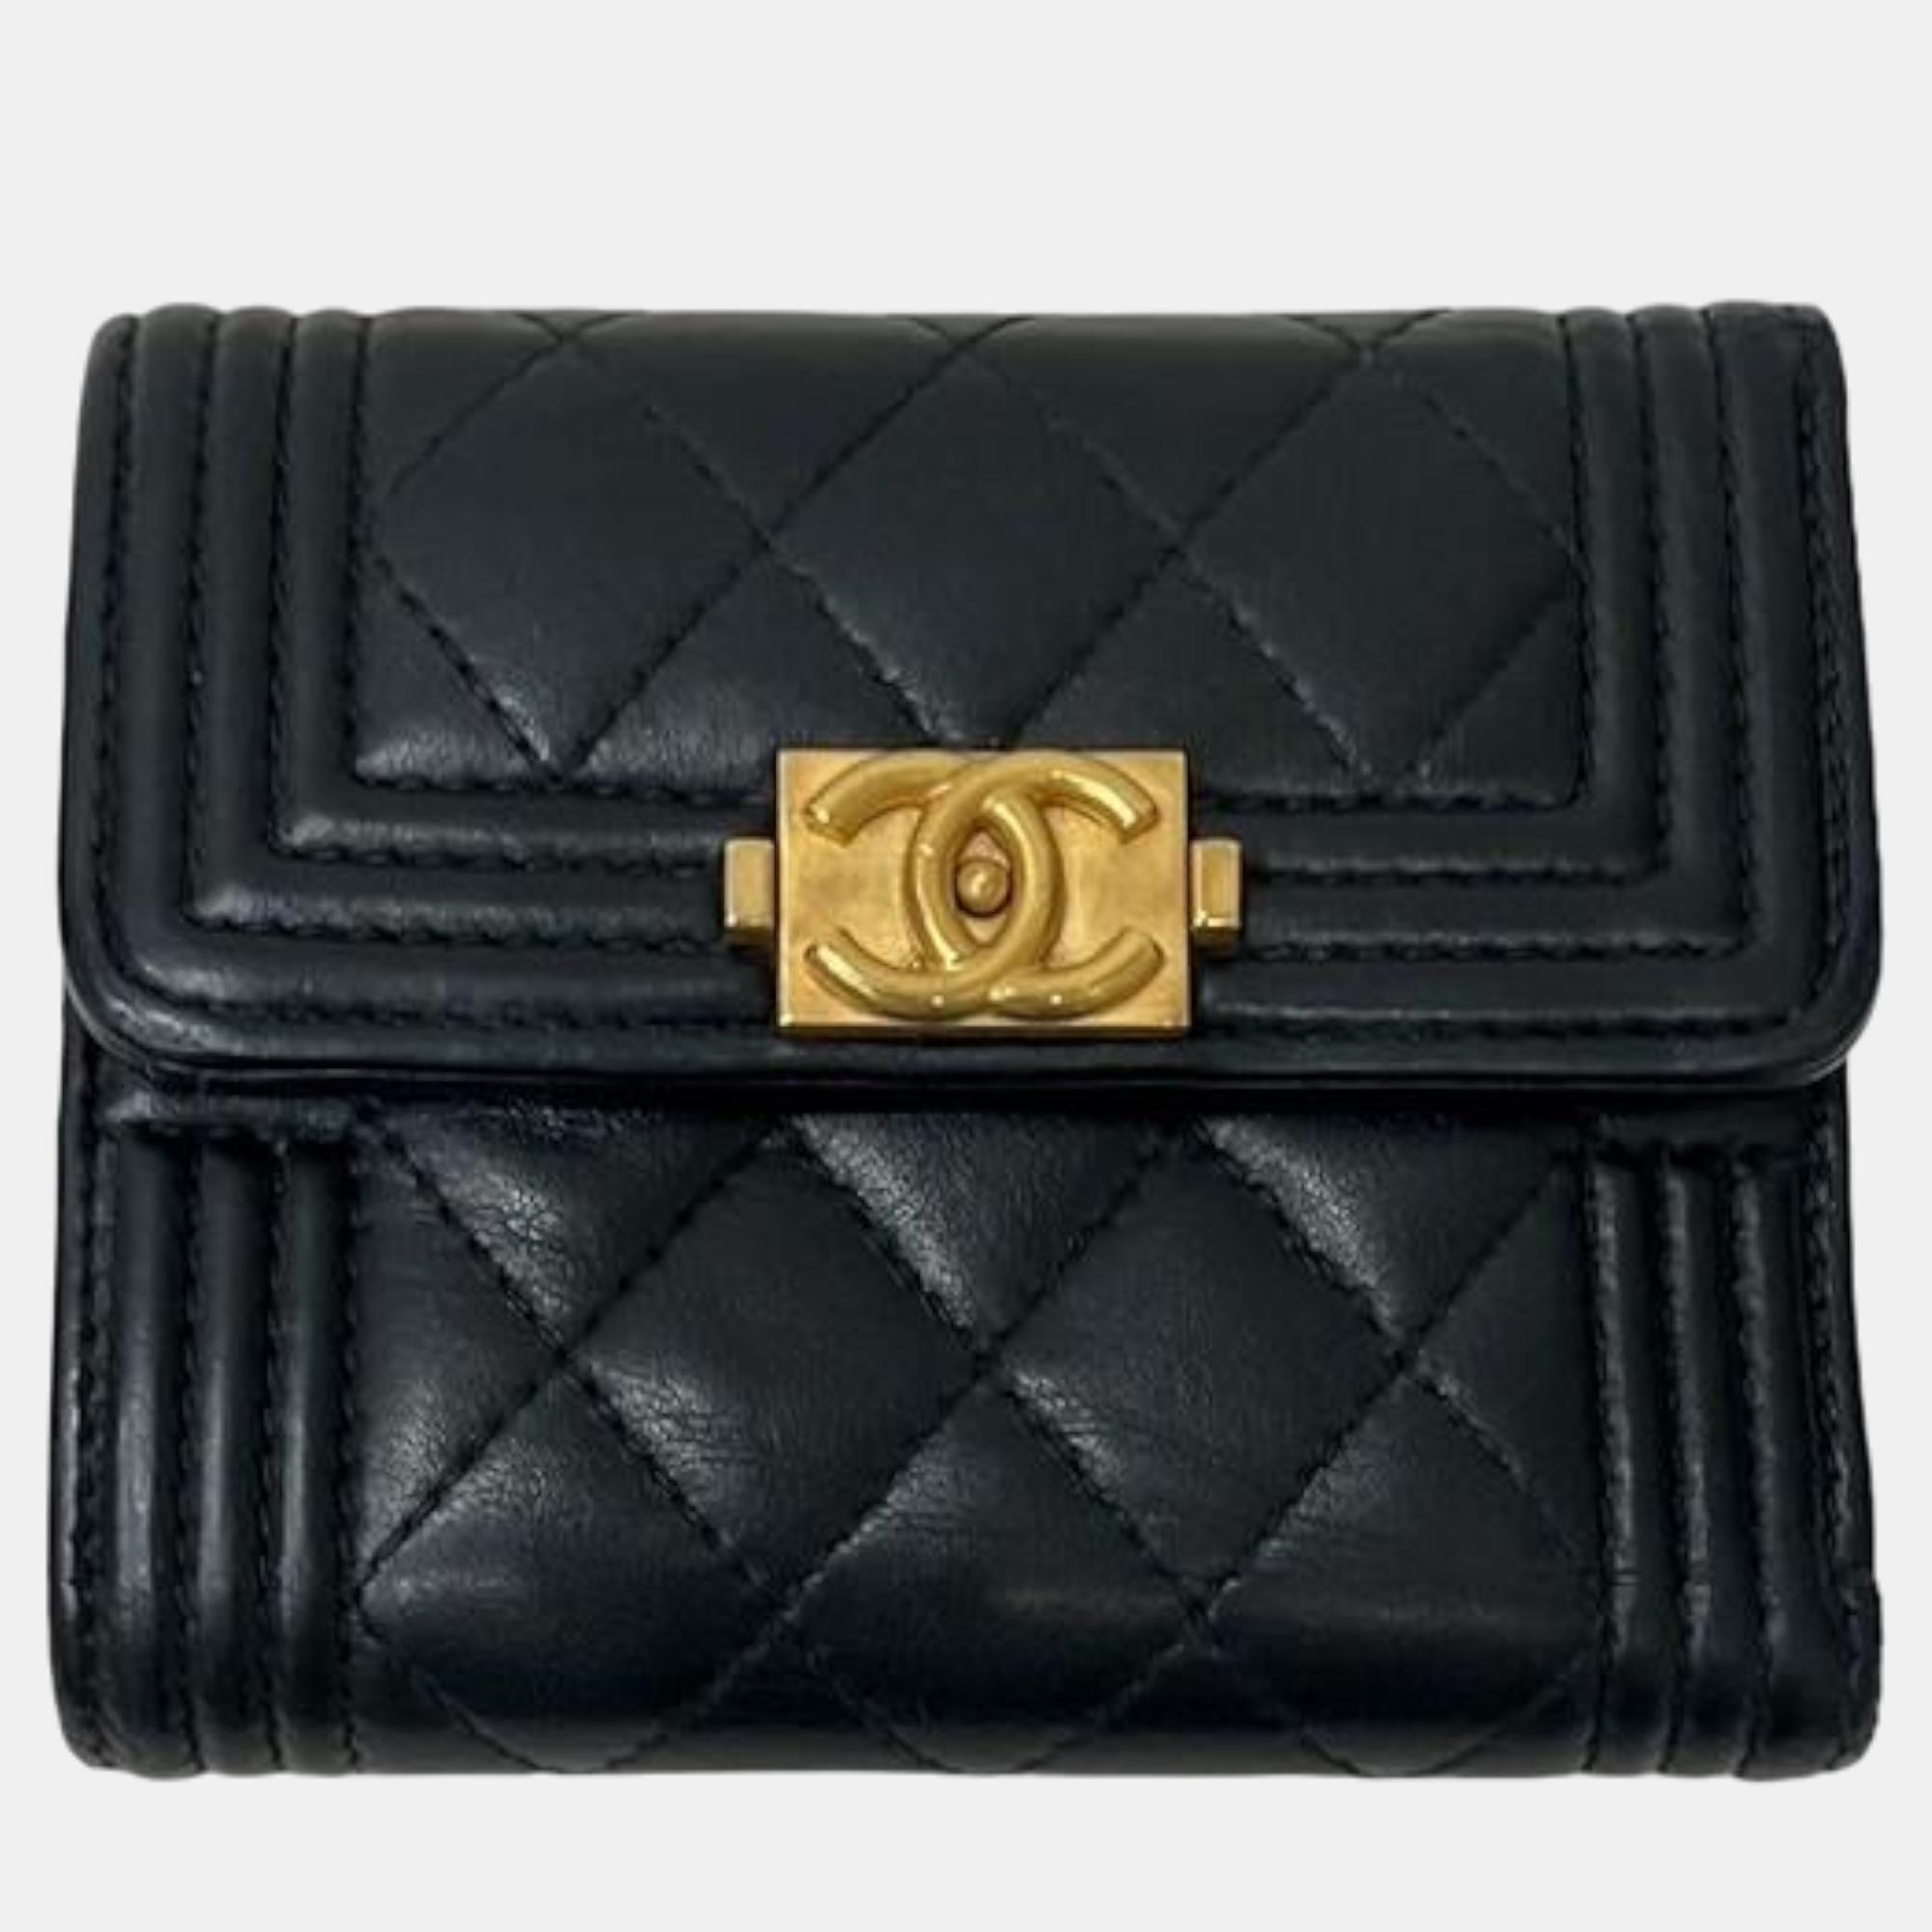 Chanel black leather cc boy flap wallet